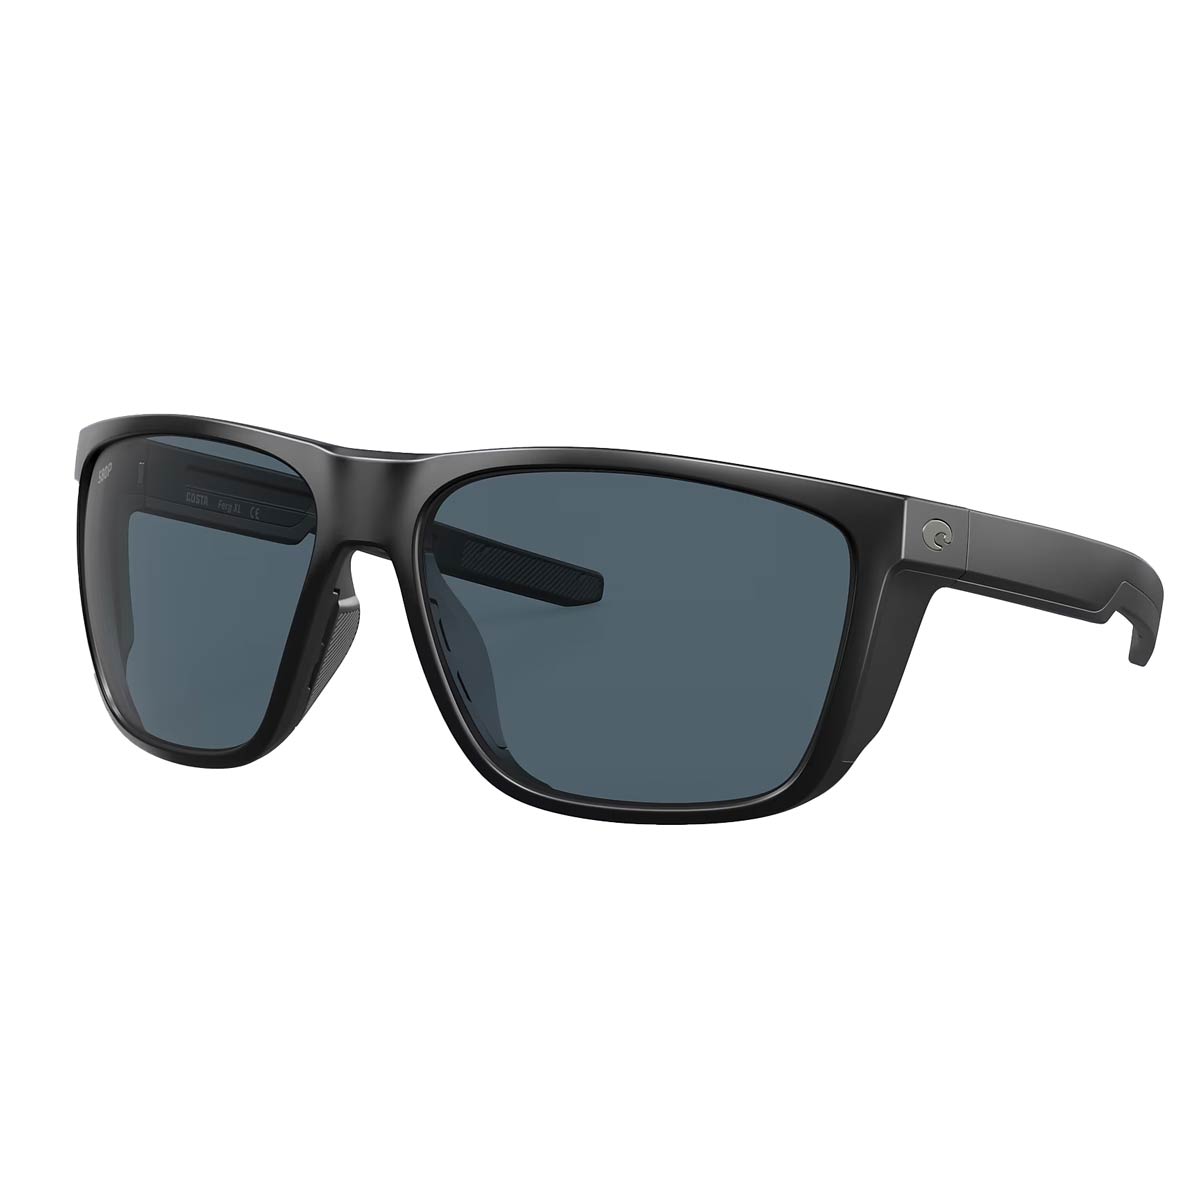 Costa Ferg XL Sunglasses - Frame Matte Black - Lens Gray 580 Polycarbonate